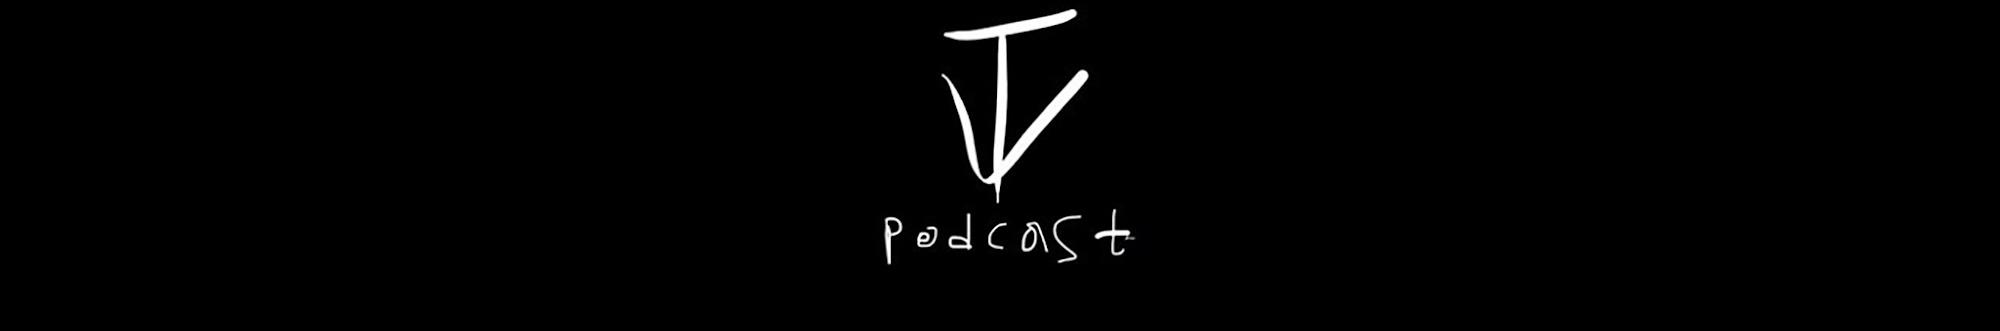 Tvoy Podcast